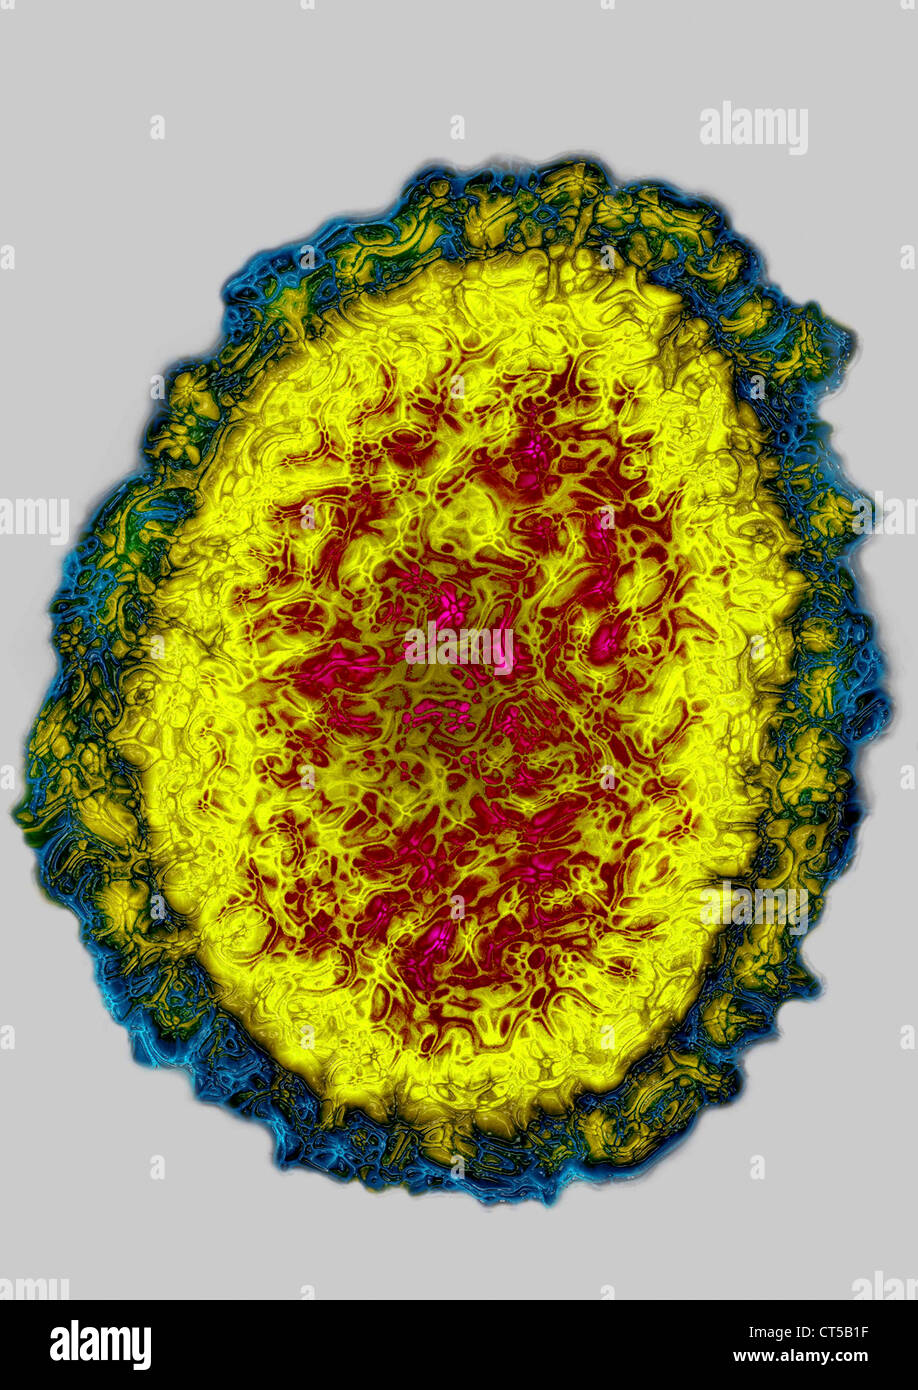 INFLUENZA A H1N1 VIRUS Stockfoto